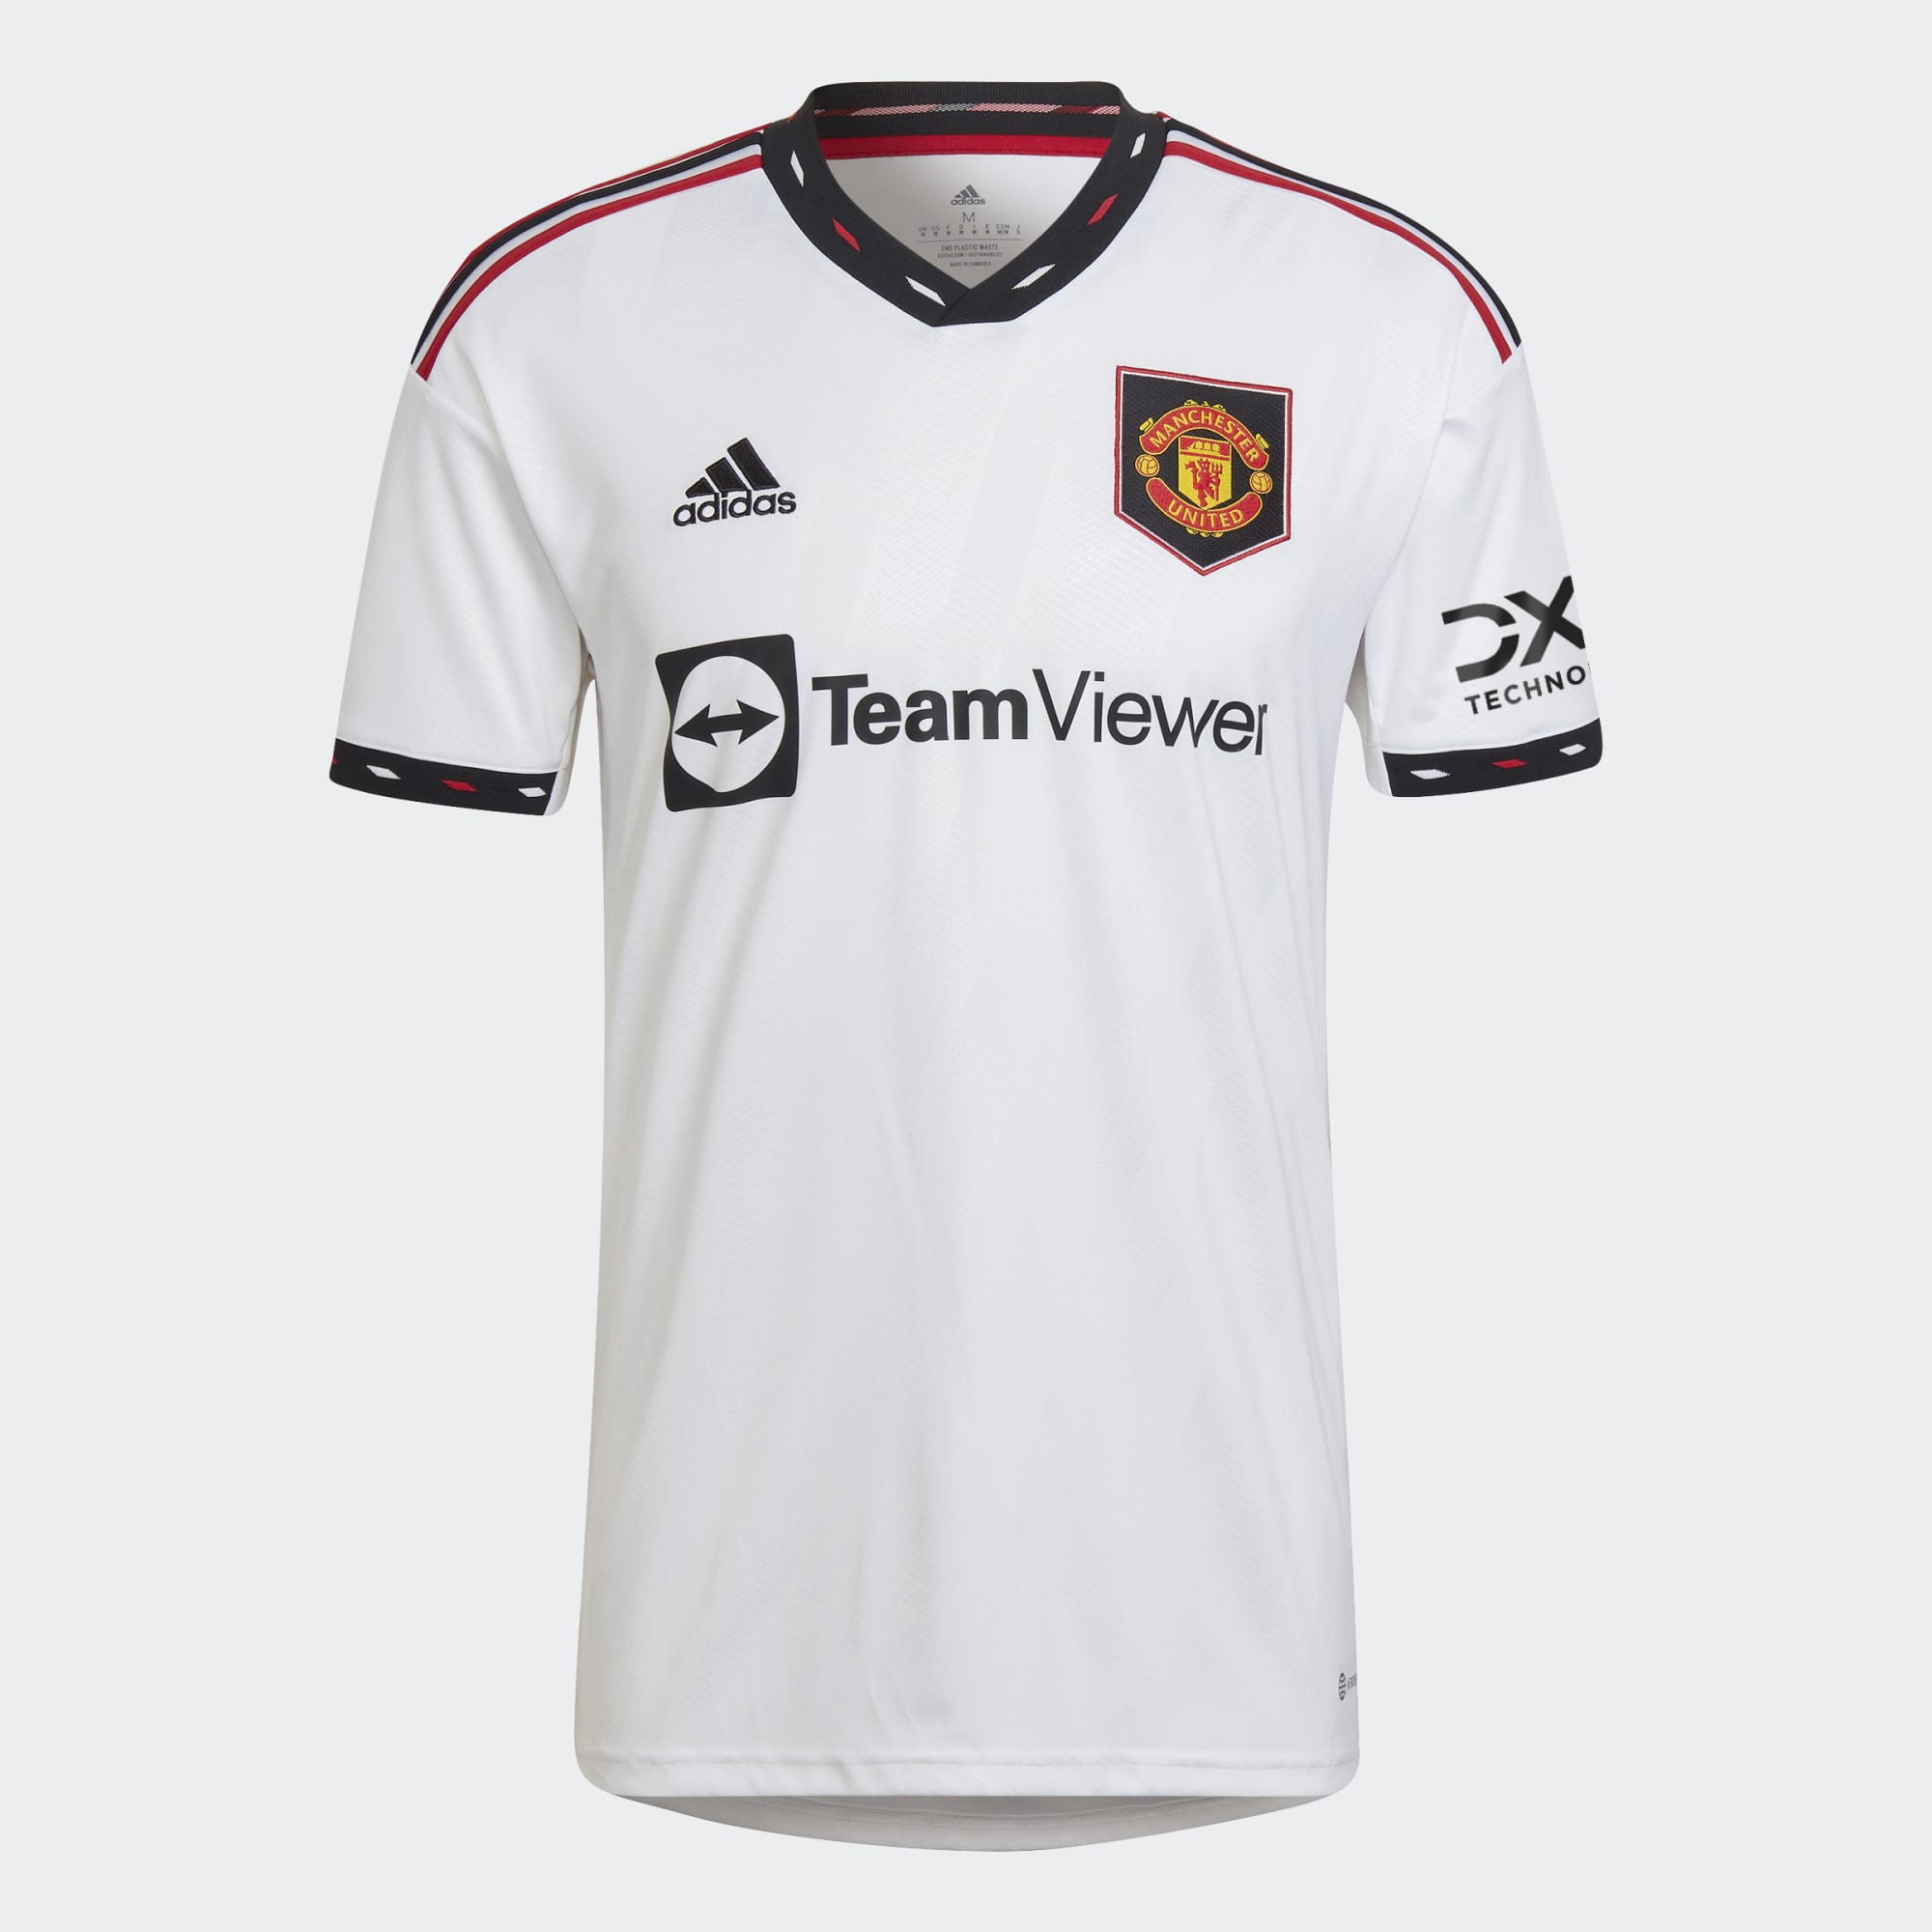 🔥Last piece🔥 Manchester United X Adidas Originals 88-90 away jersey